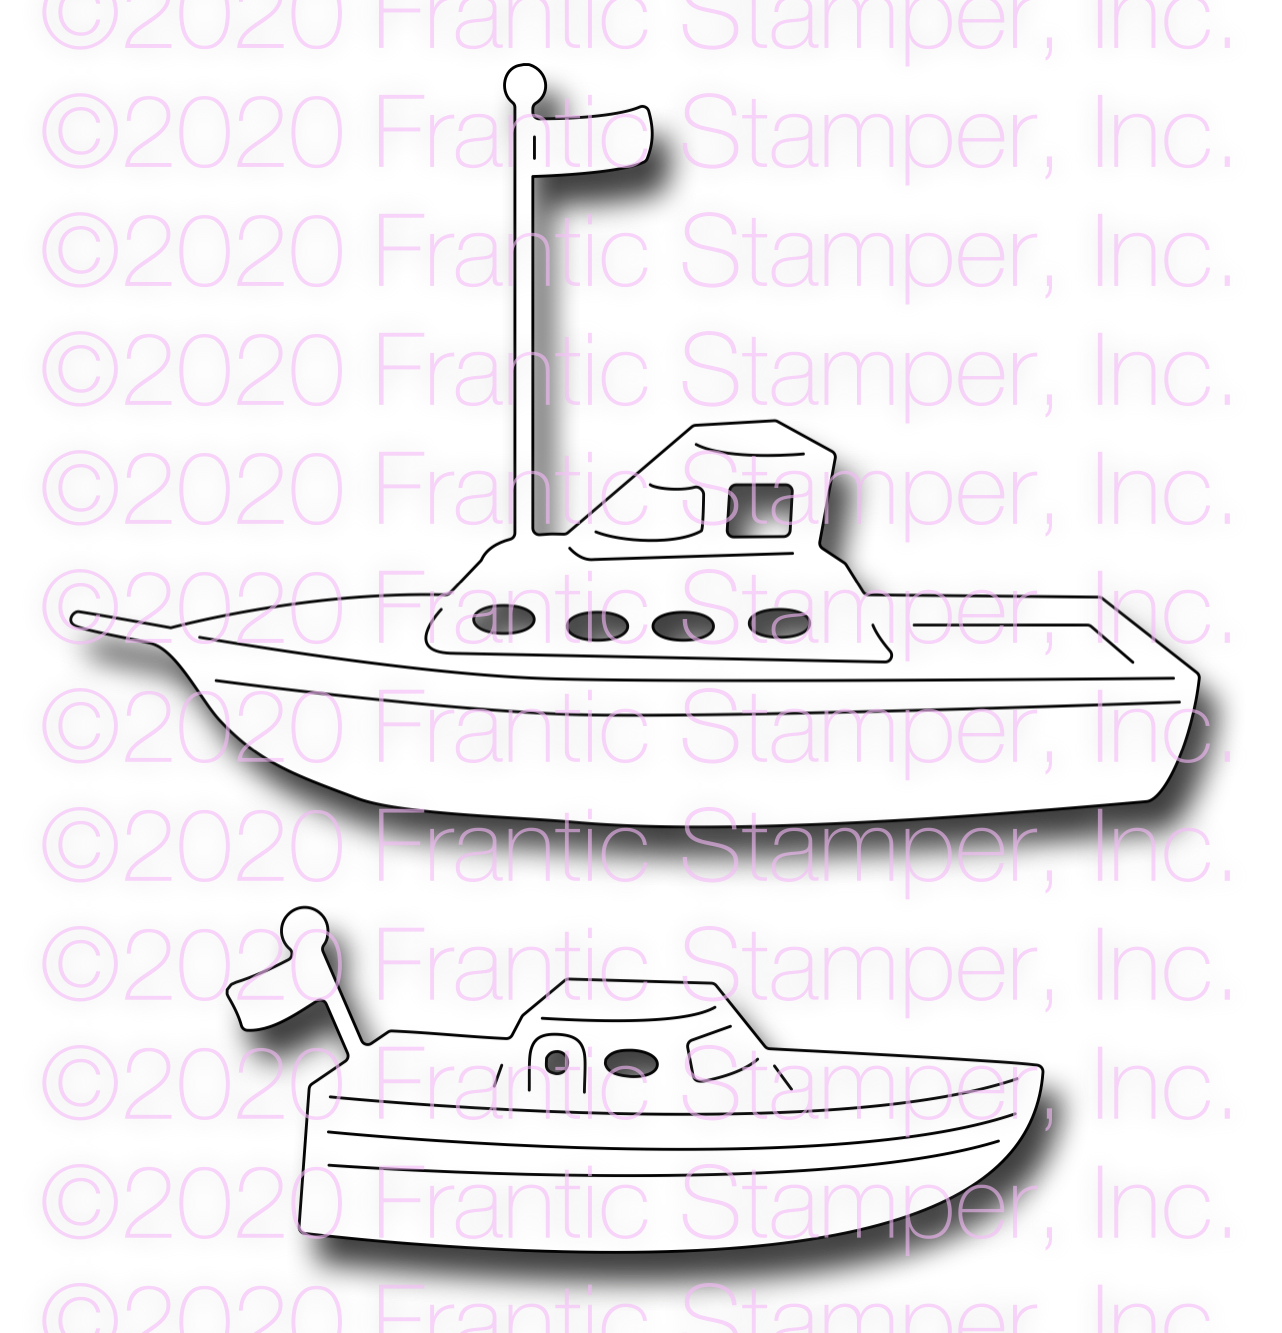 Frantic Stamper Precision Die - Pleasure Boats